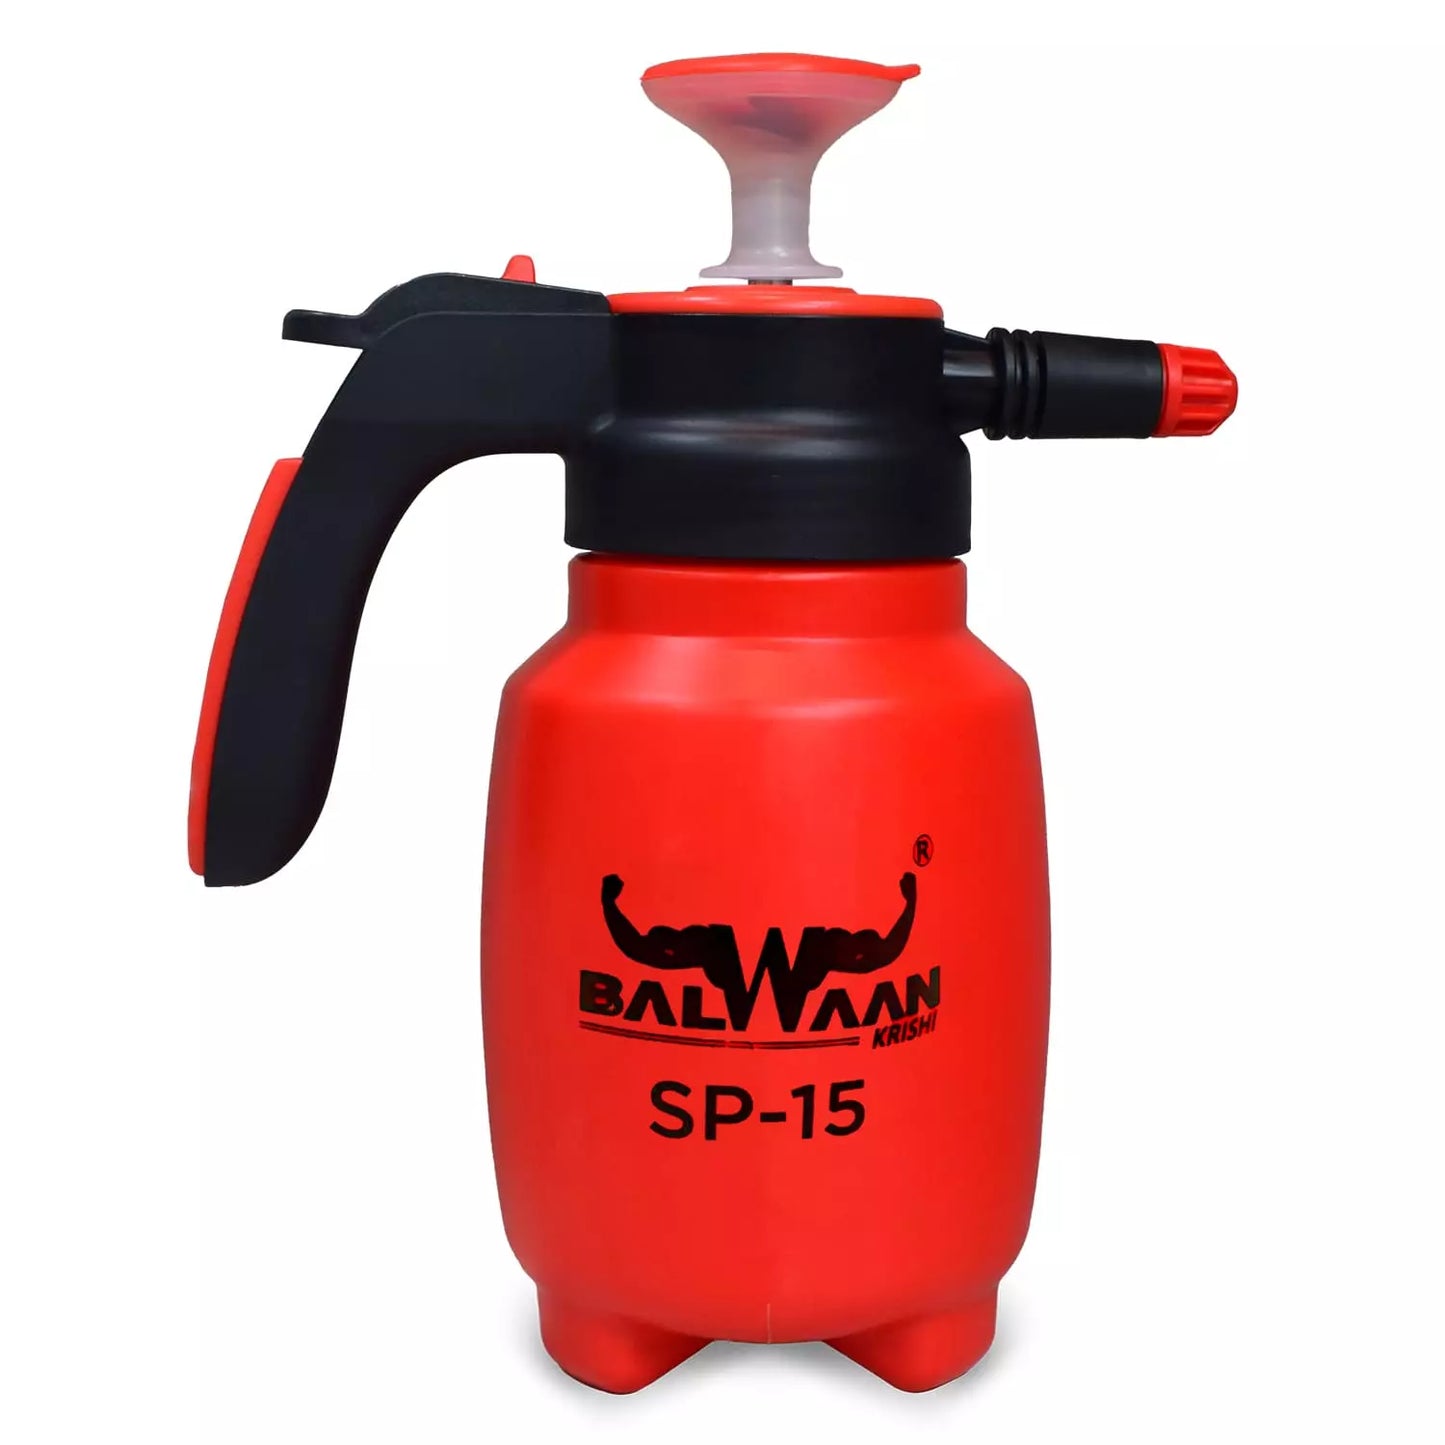 Manual Sprayer